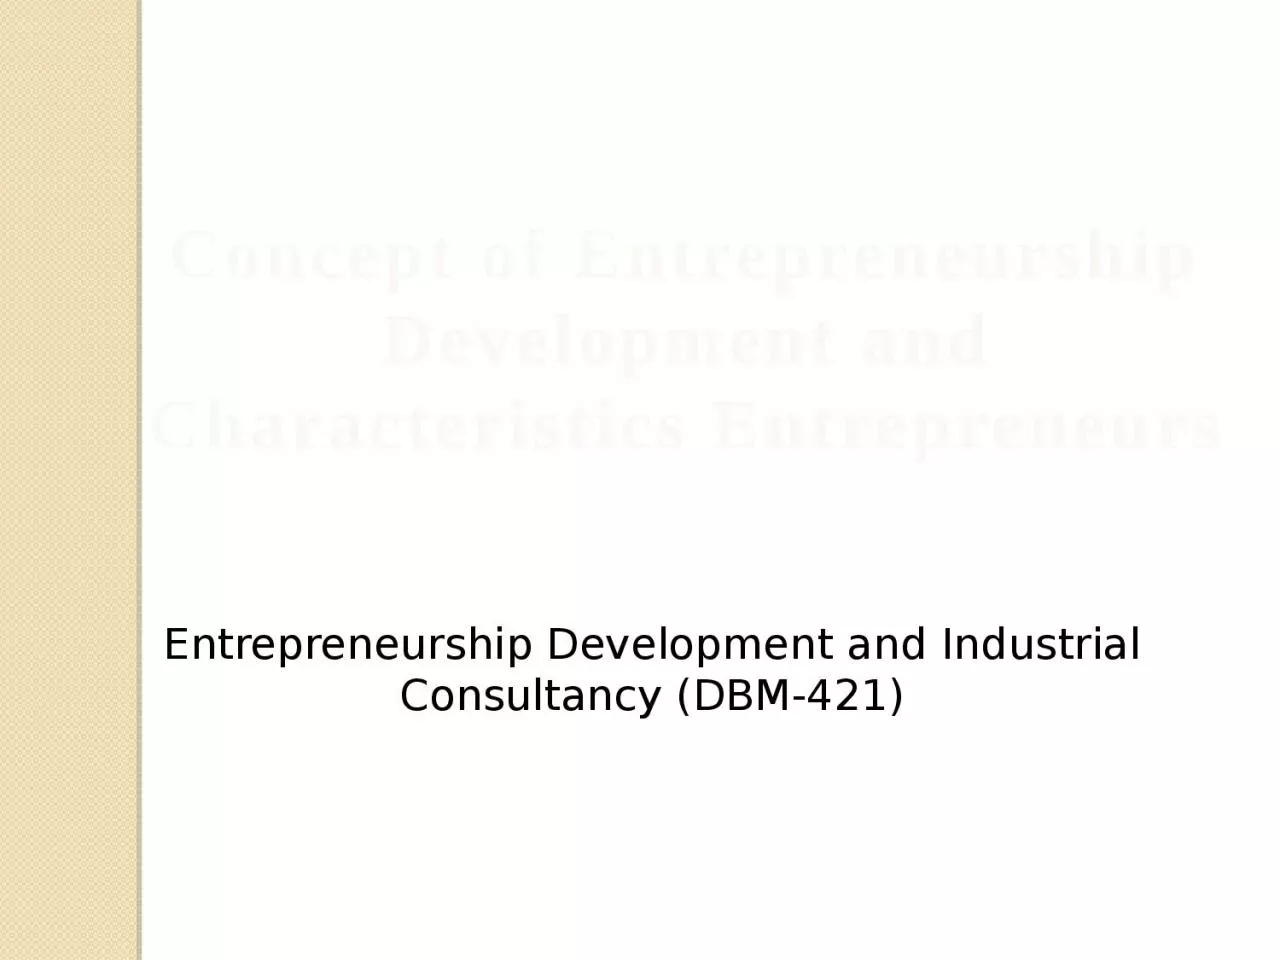 Concept of Entrepreneurship Development and